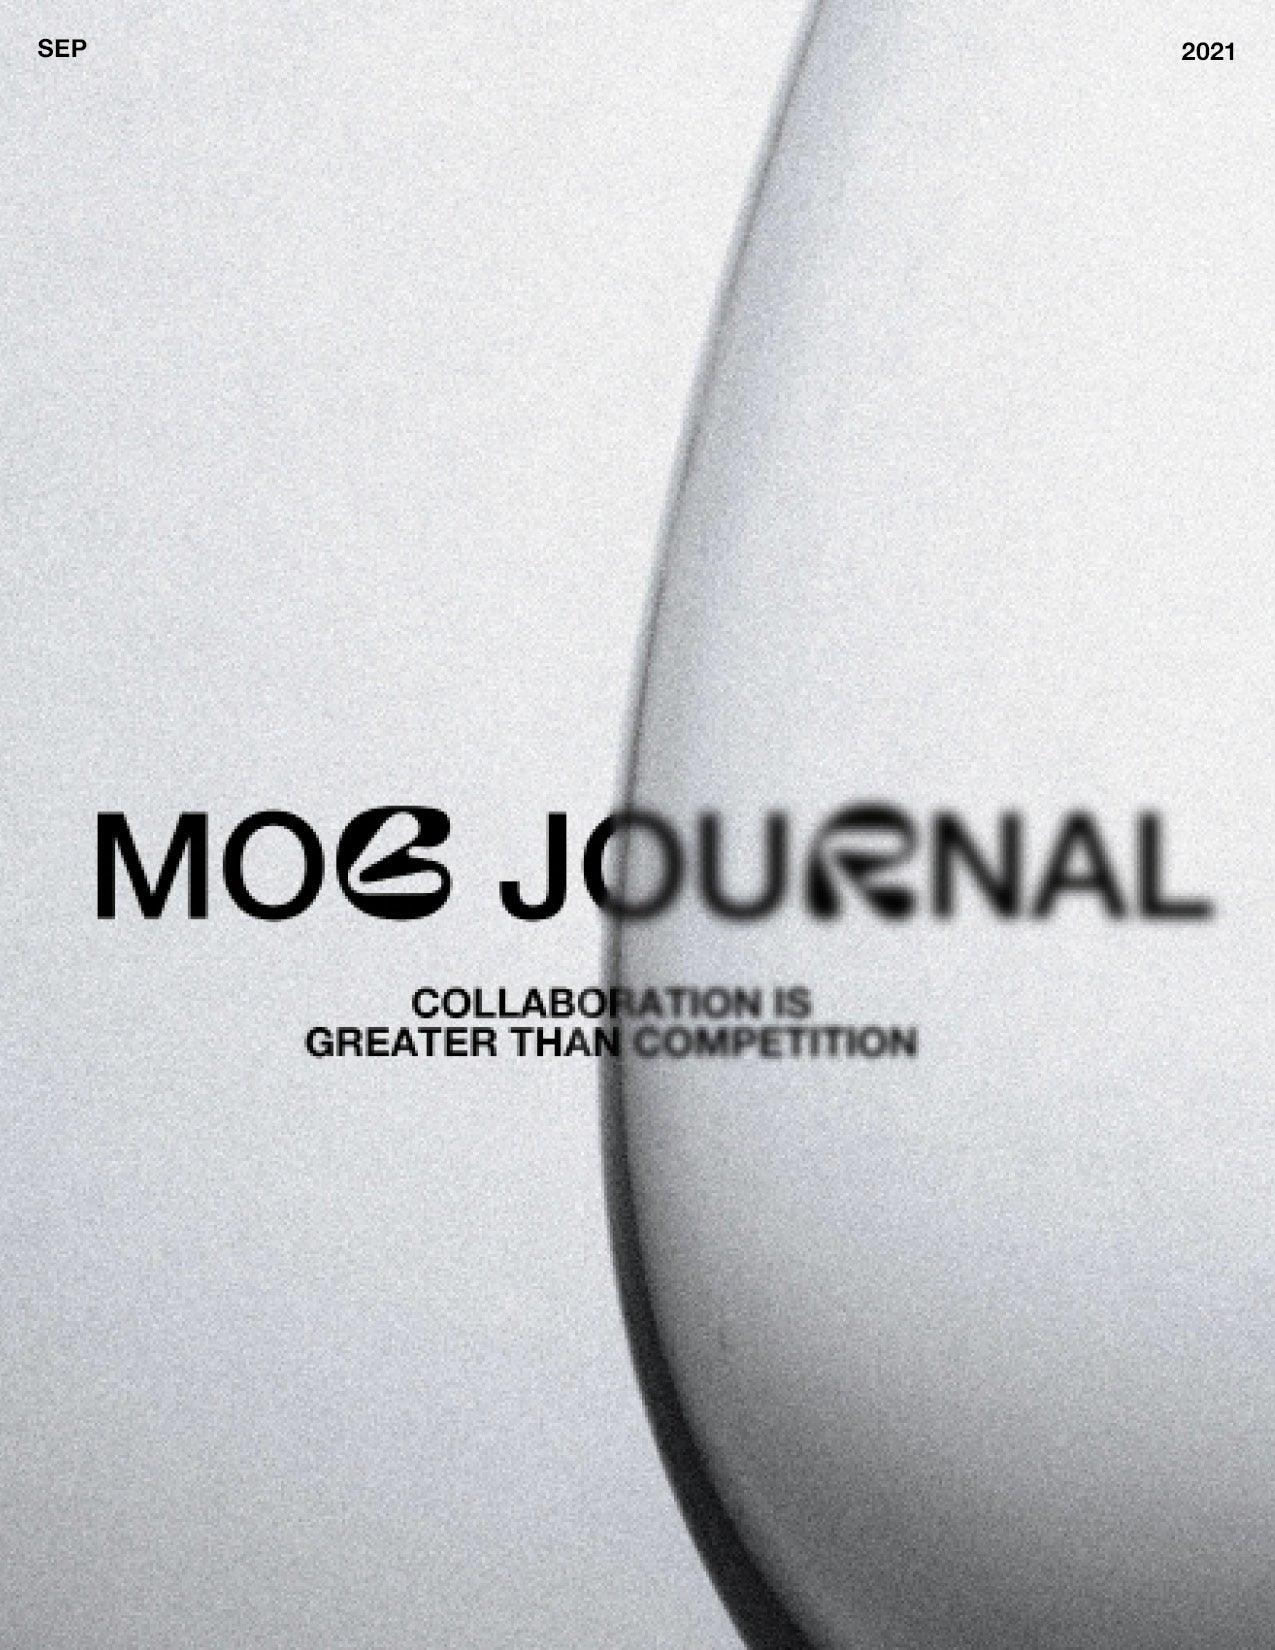 MOB JOURNAL | VOLUME SEVENTEEN | ISSUE #43 - Mob Journal